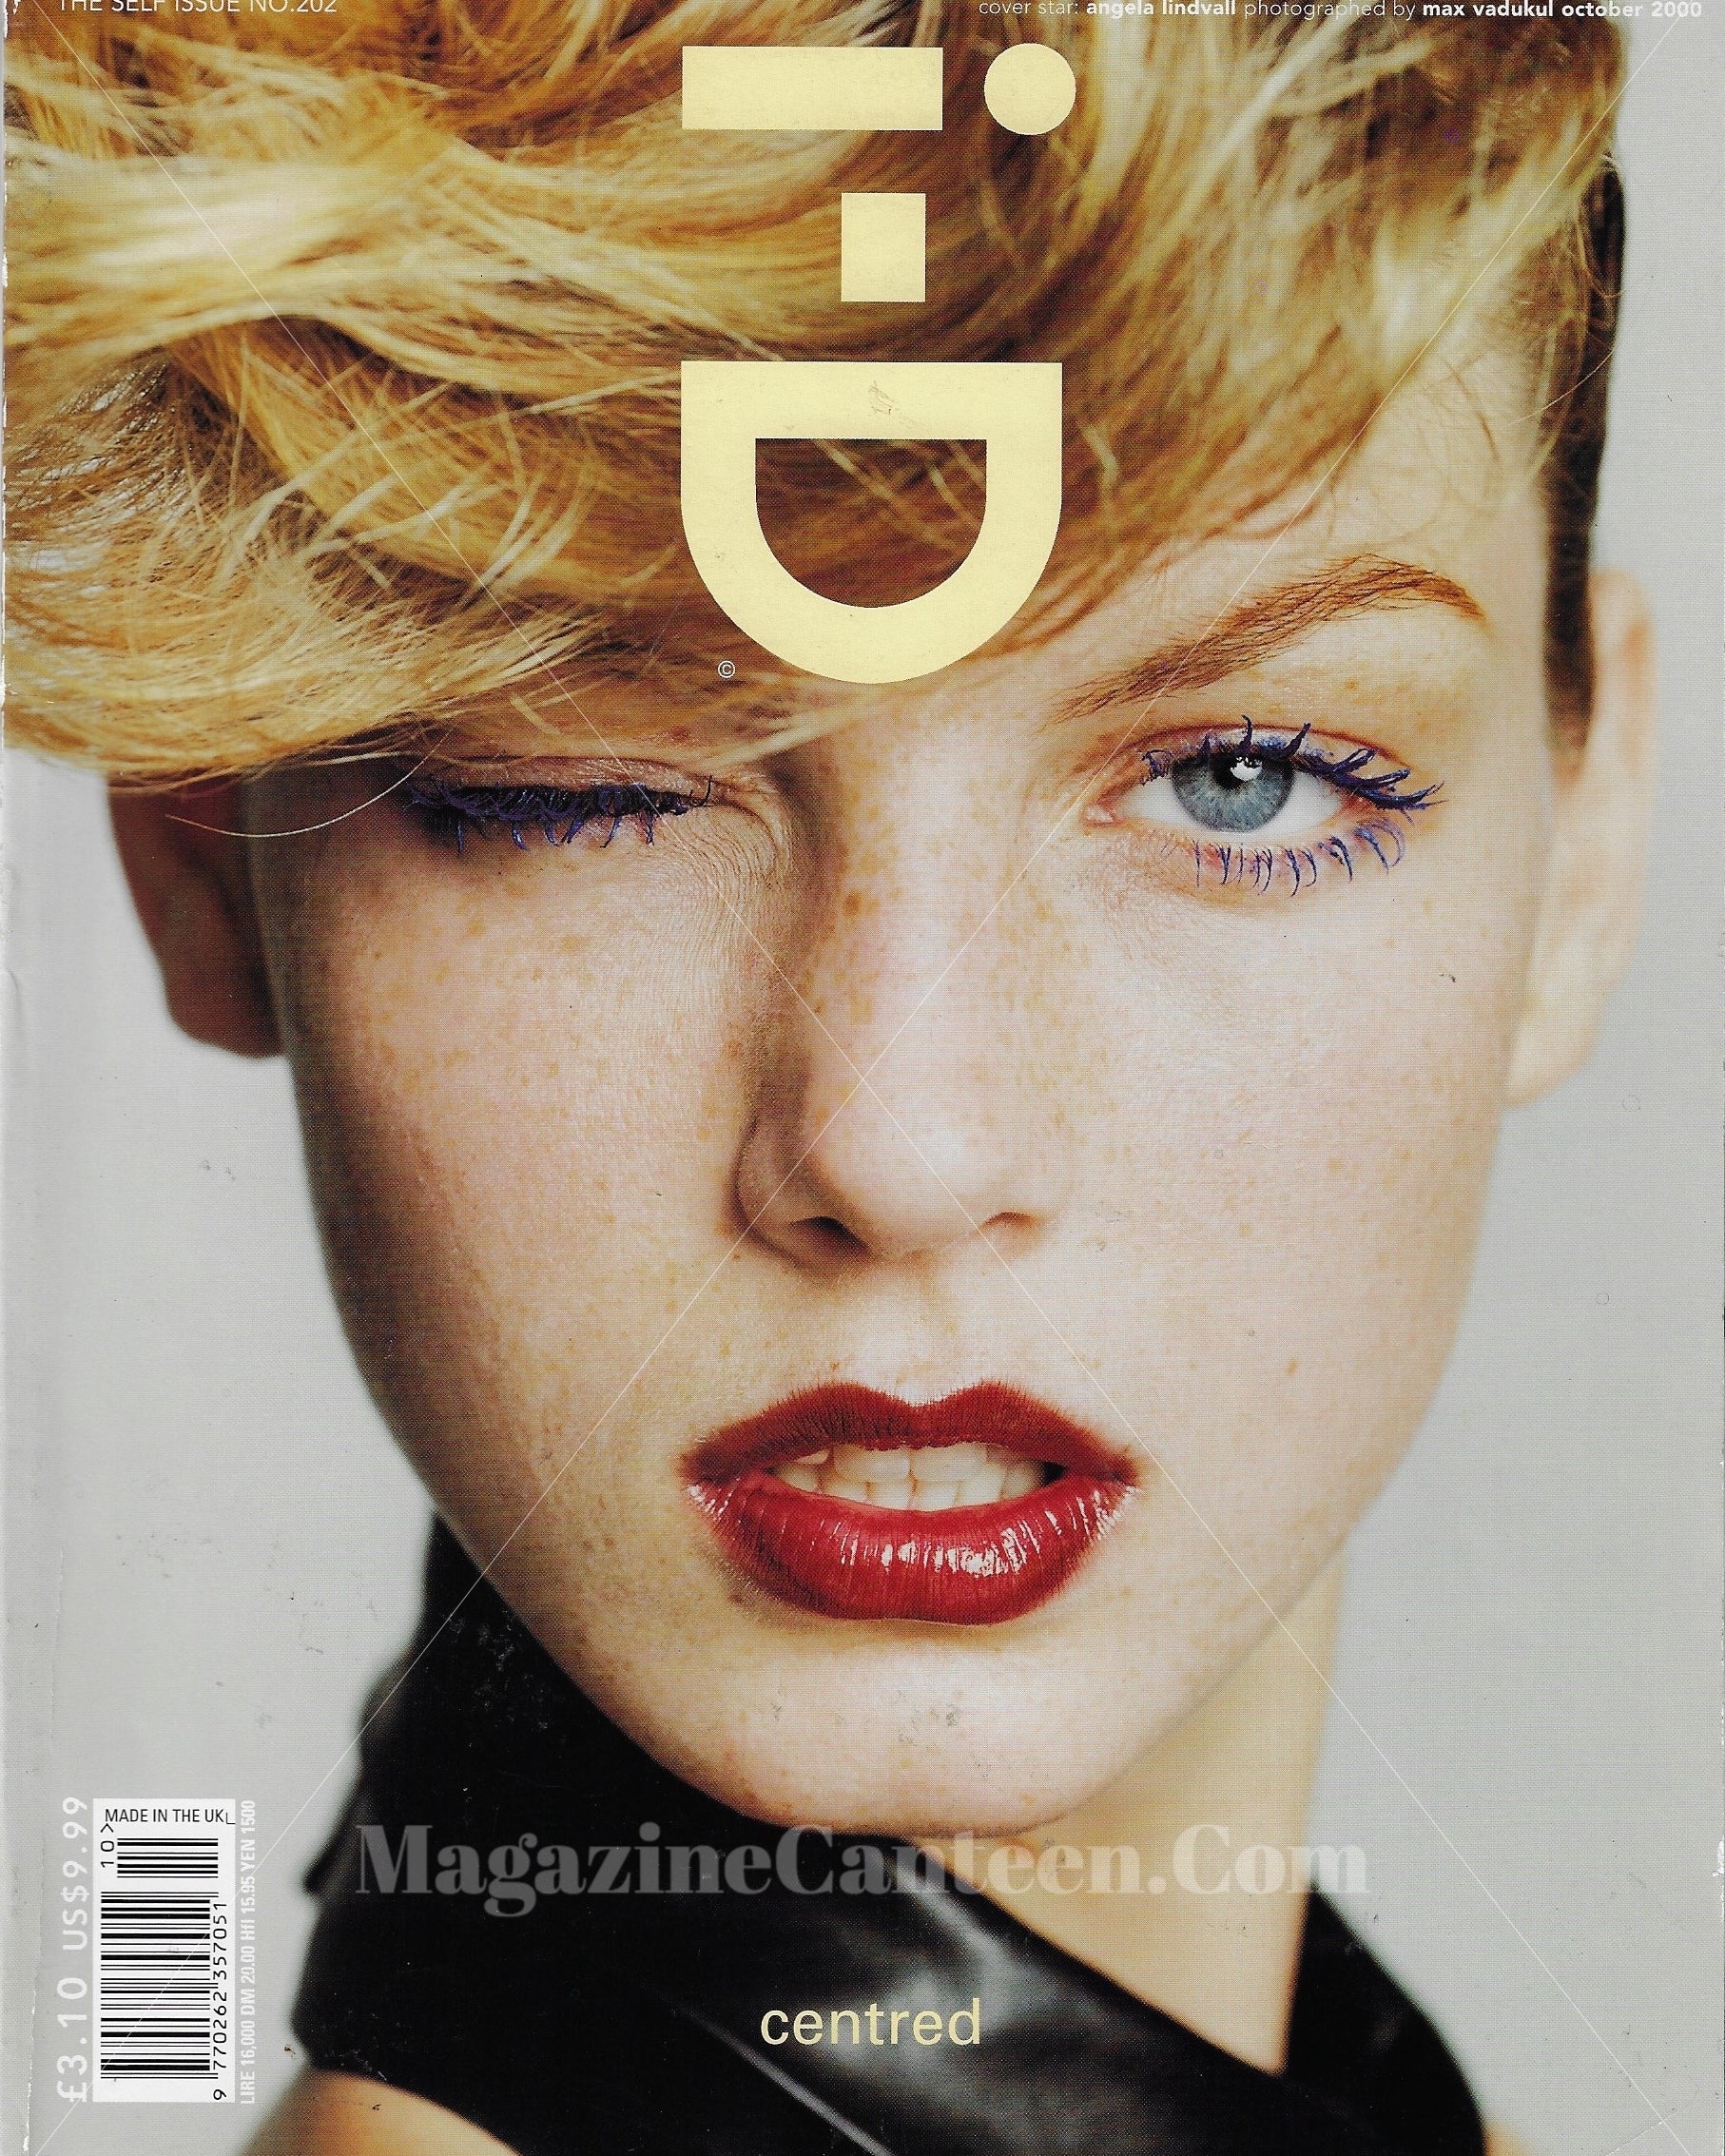 I-D Magazine 202 - Angela Lindvall 2000